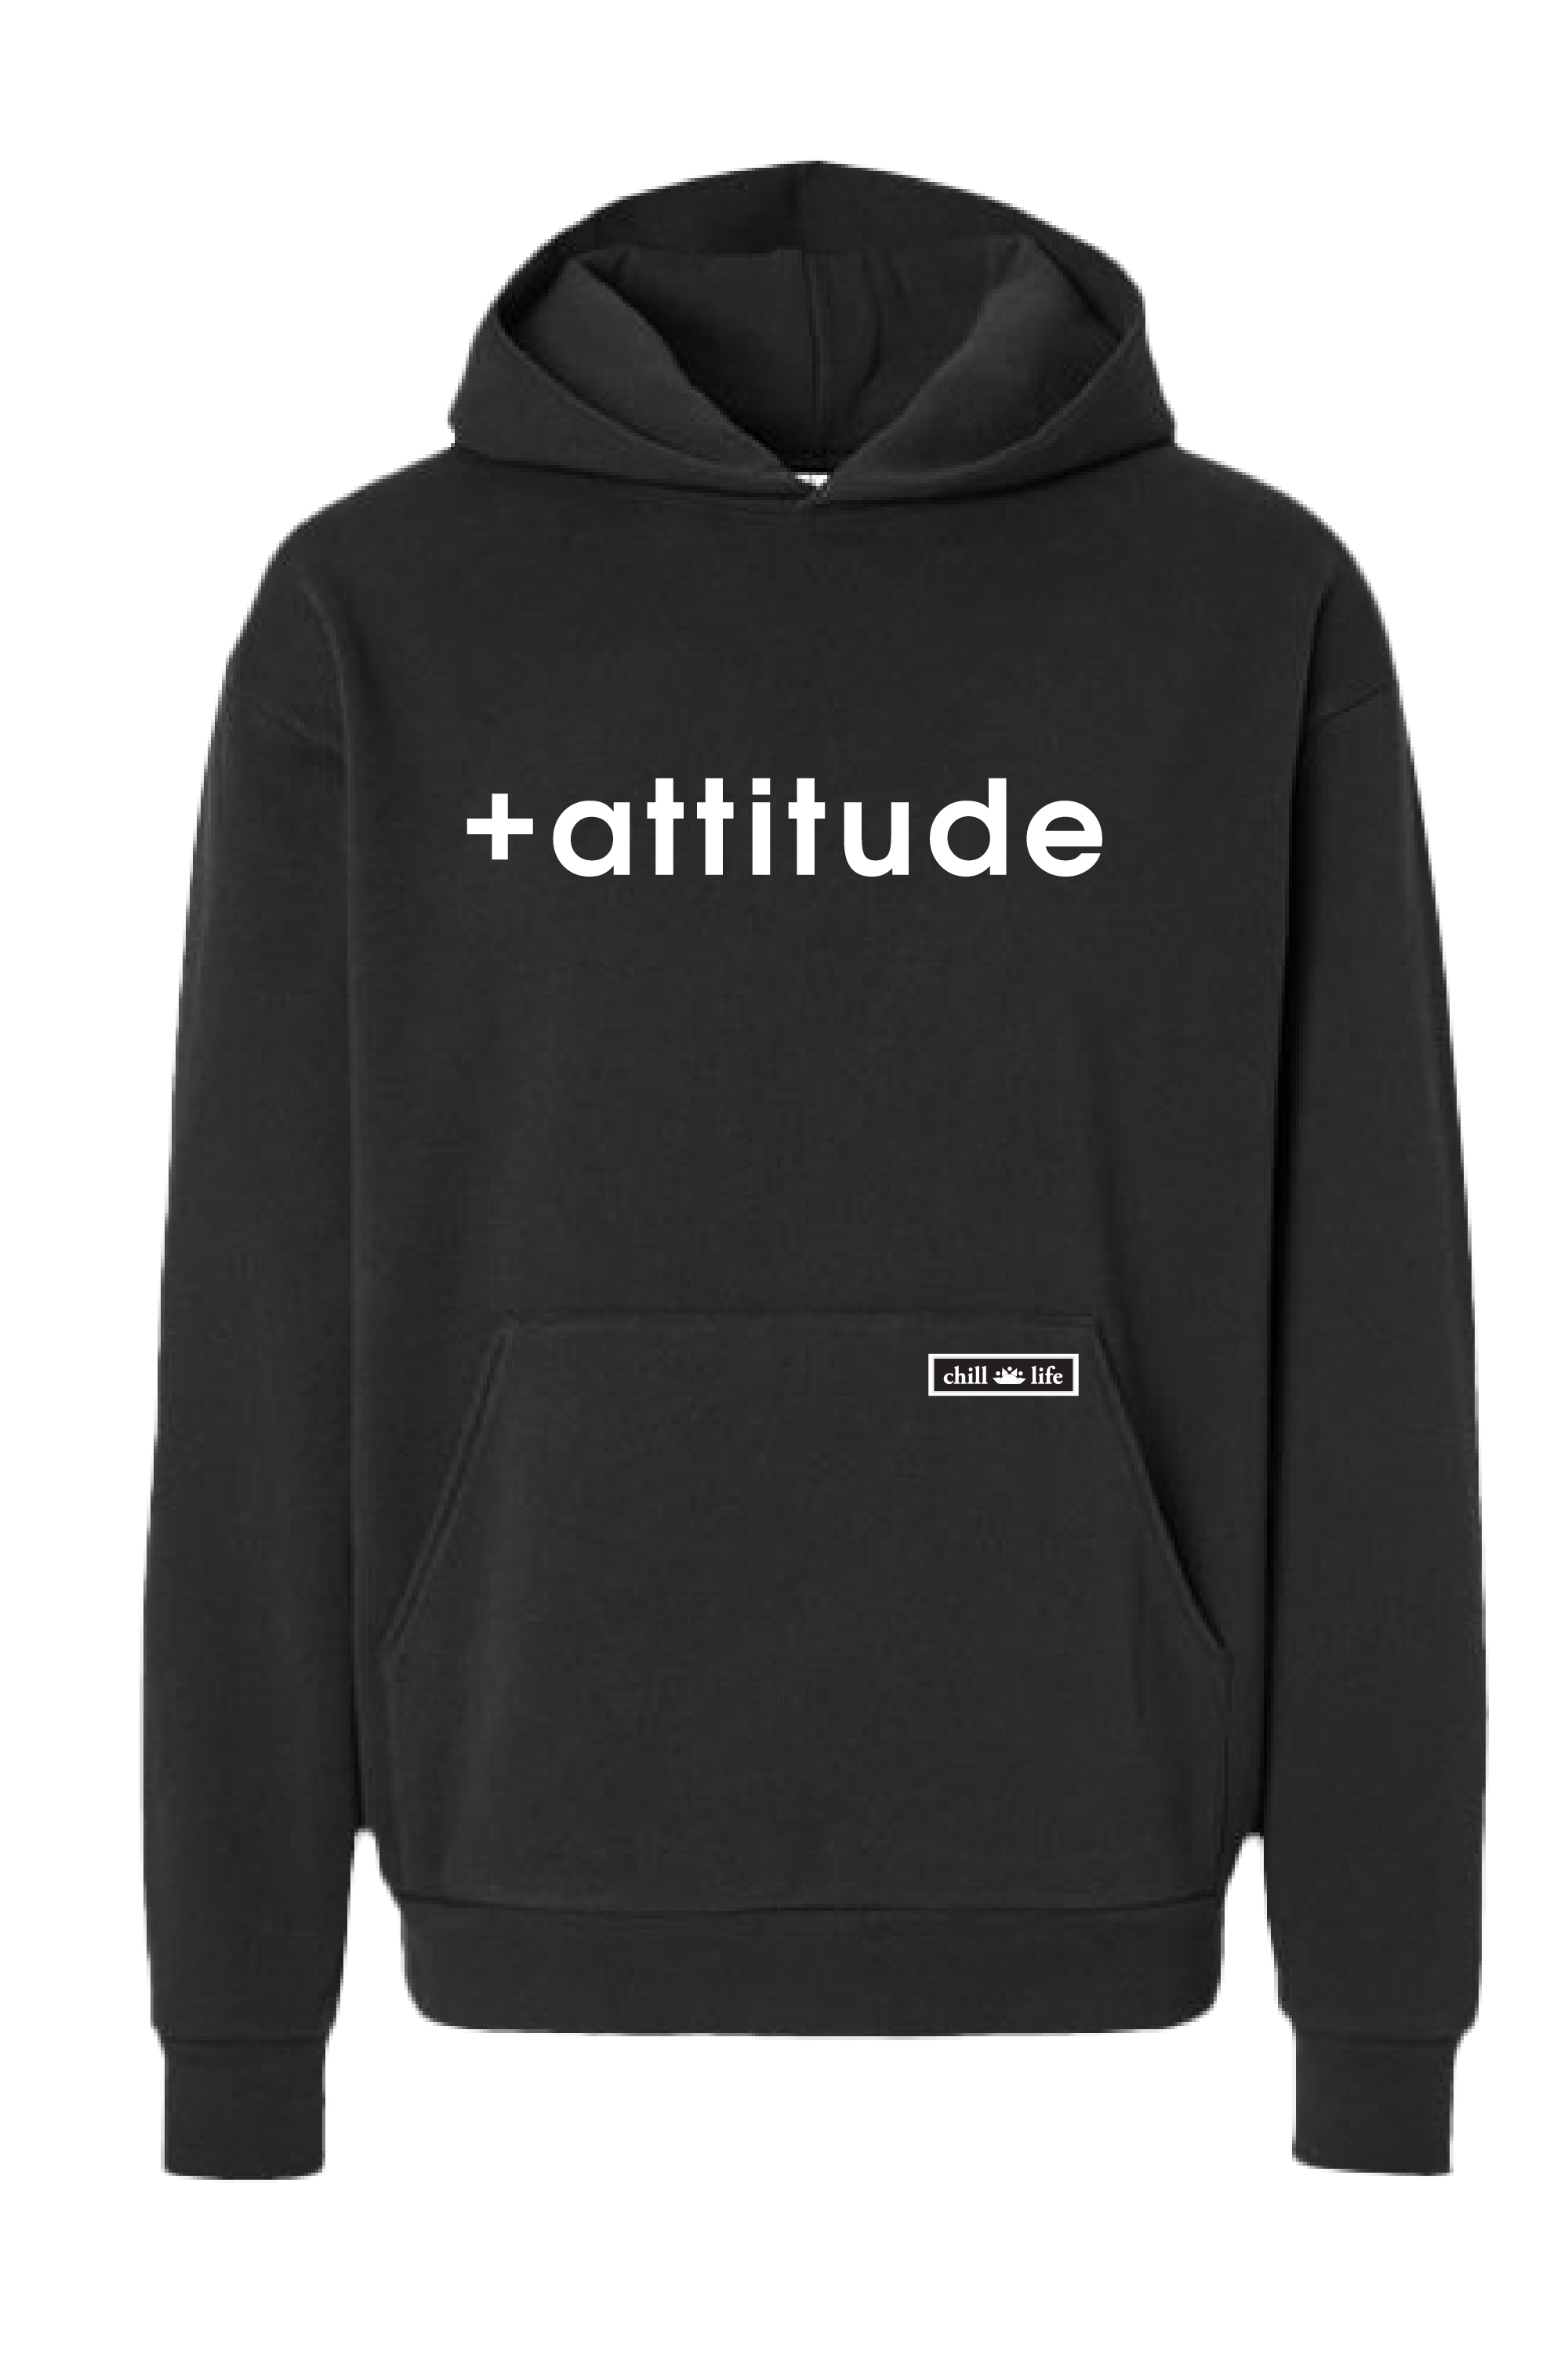 +attitude Hoodie - Black chill life style